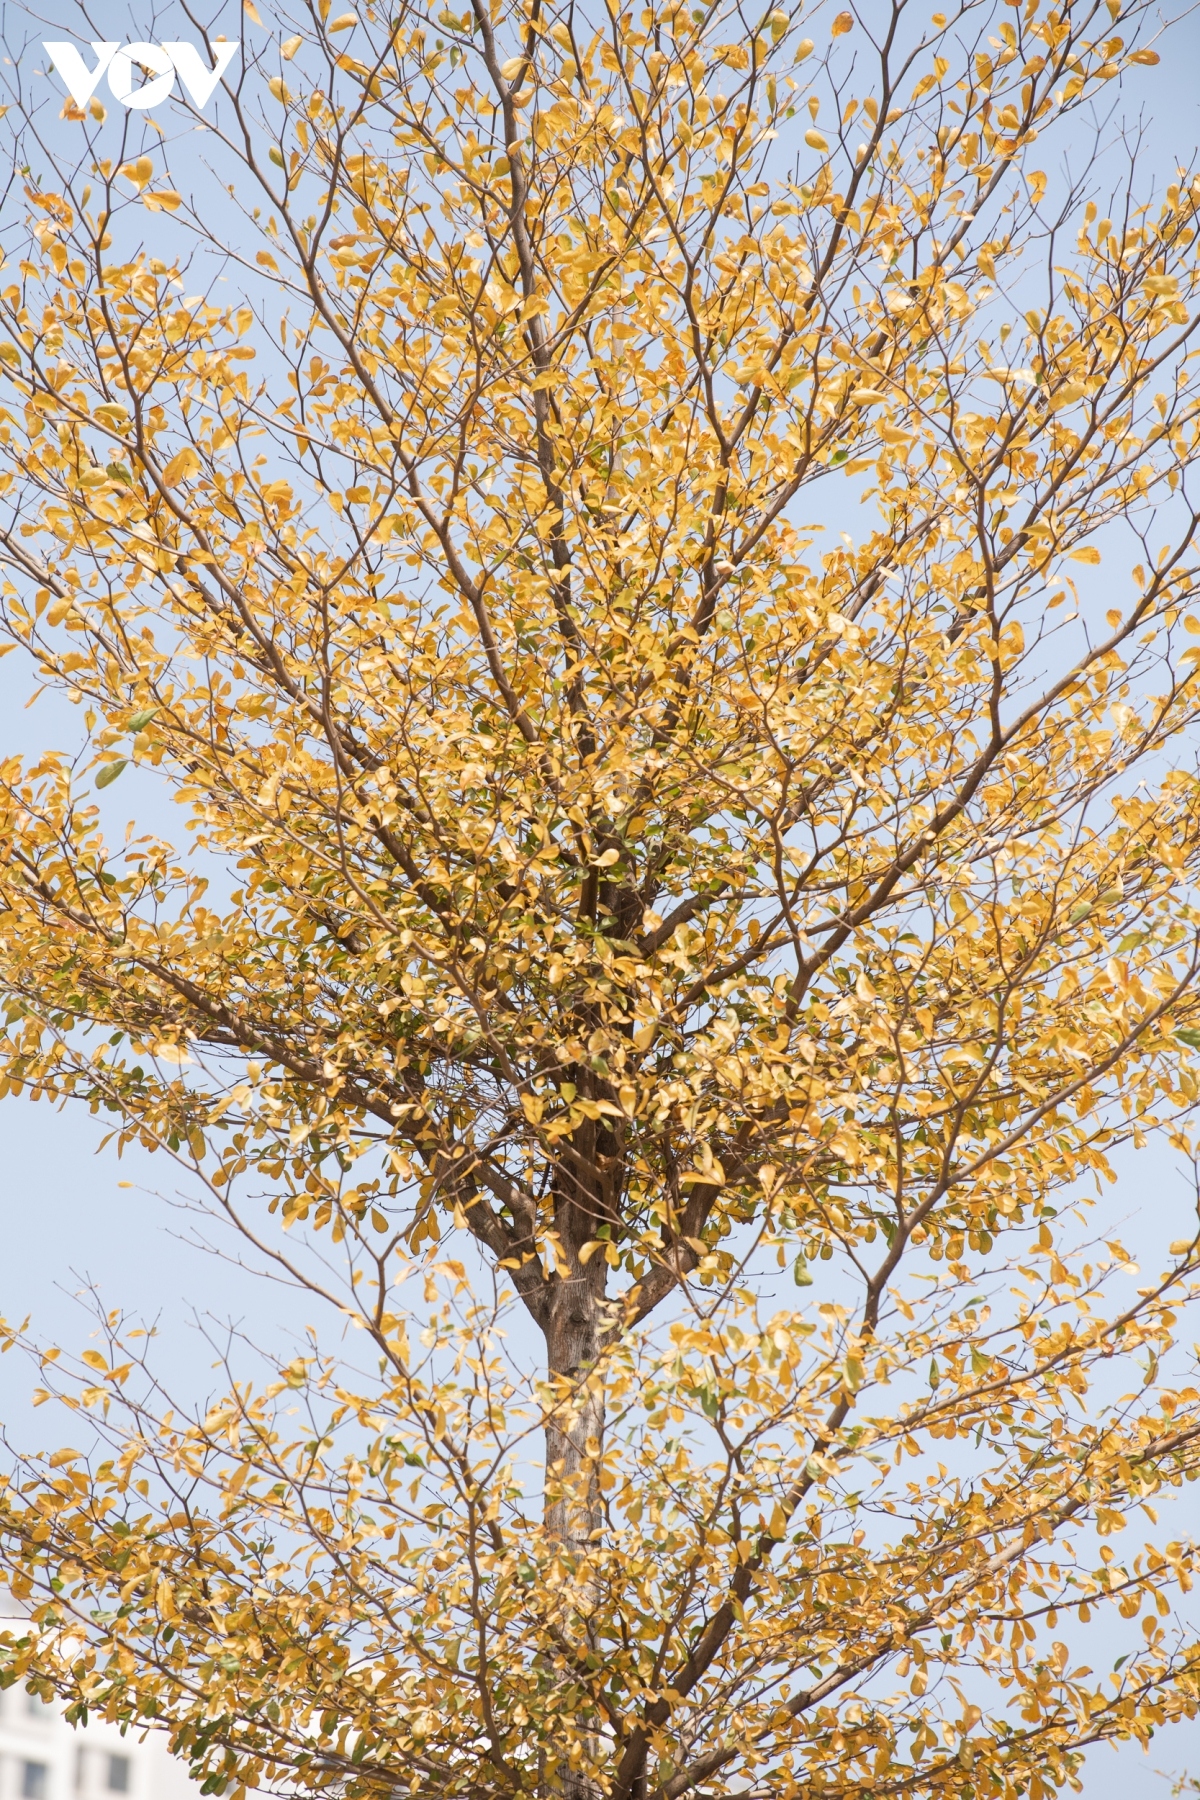 season for falling almond leaves creates dreamy hanoi picture 6